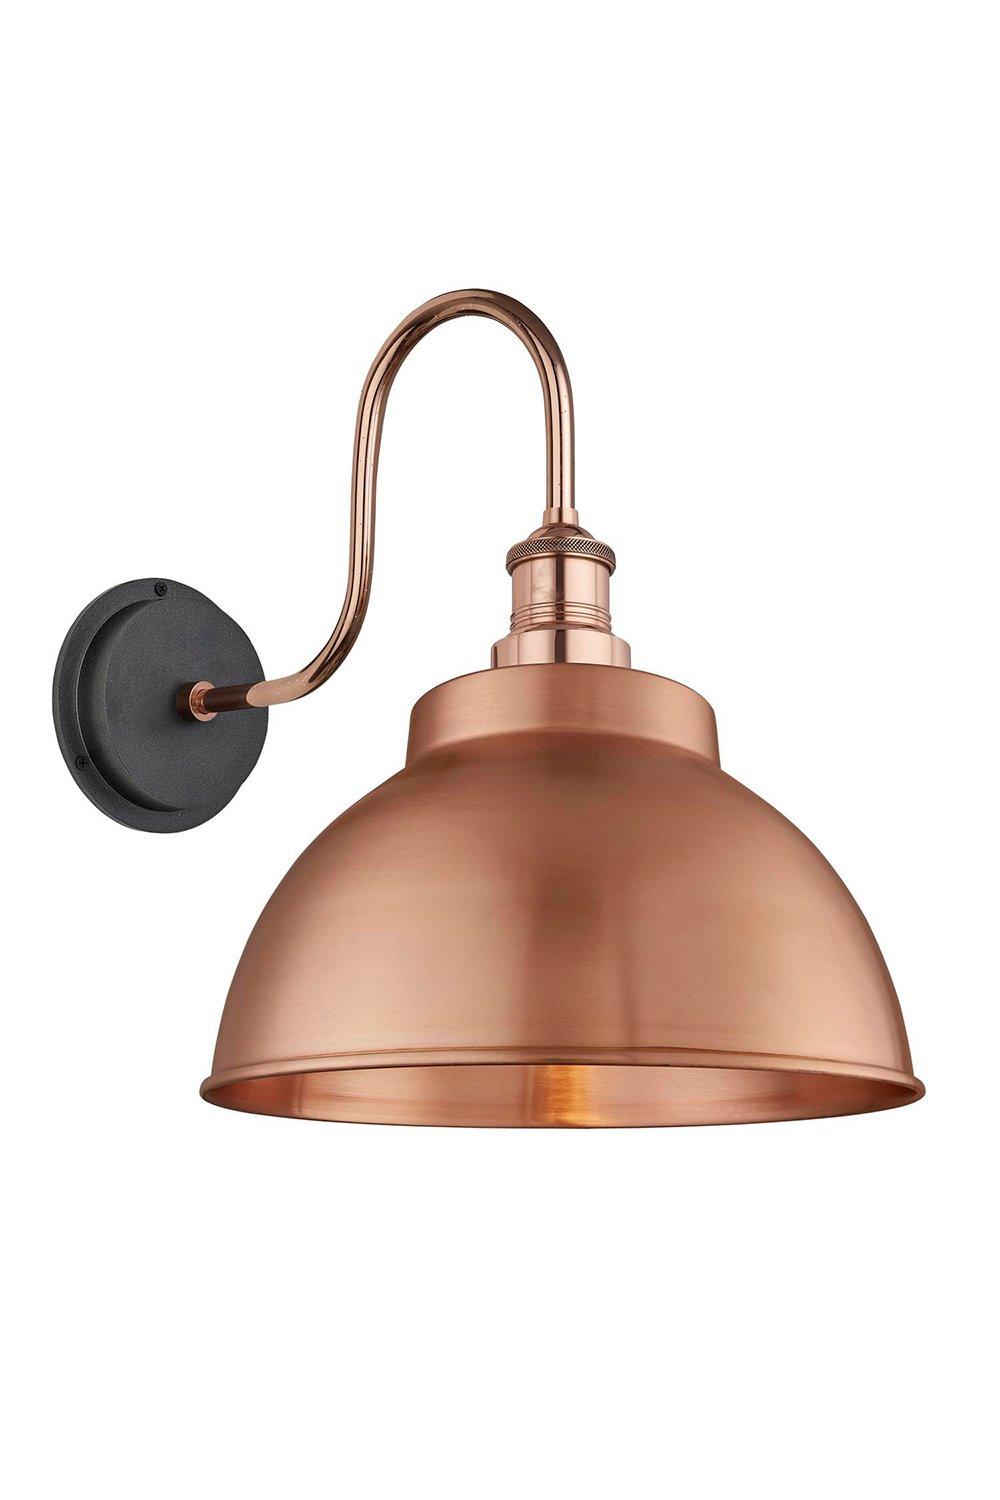 Swan Neck Outdoor & Bathroom Dome Wall Light, 13 Inch, Copper, Copper Holder, Globe Glass